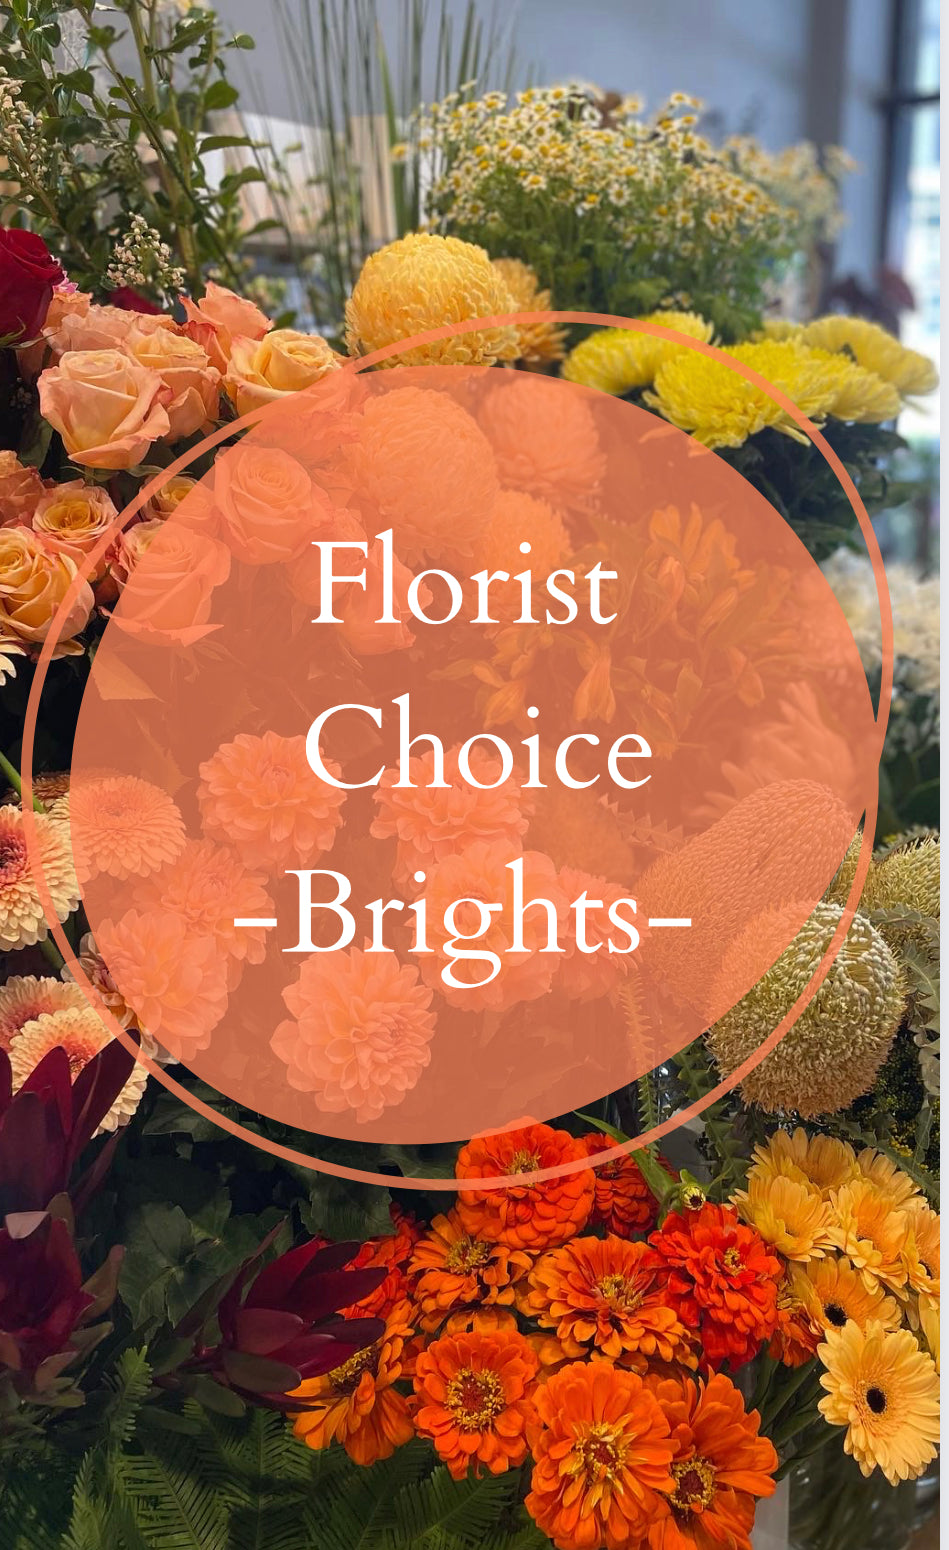 Florist Choice - Bright